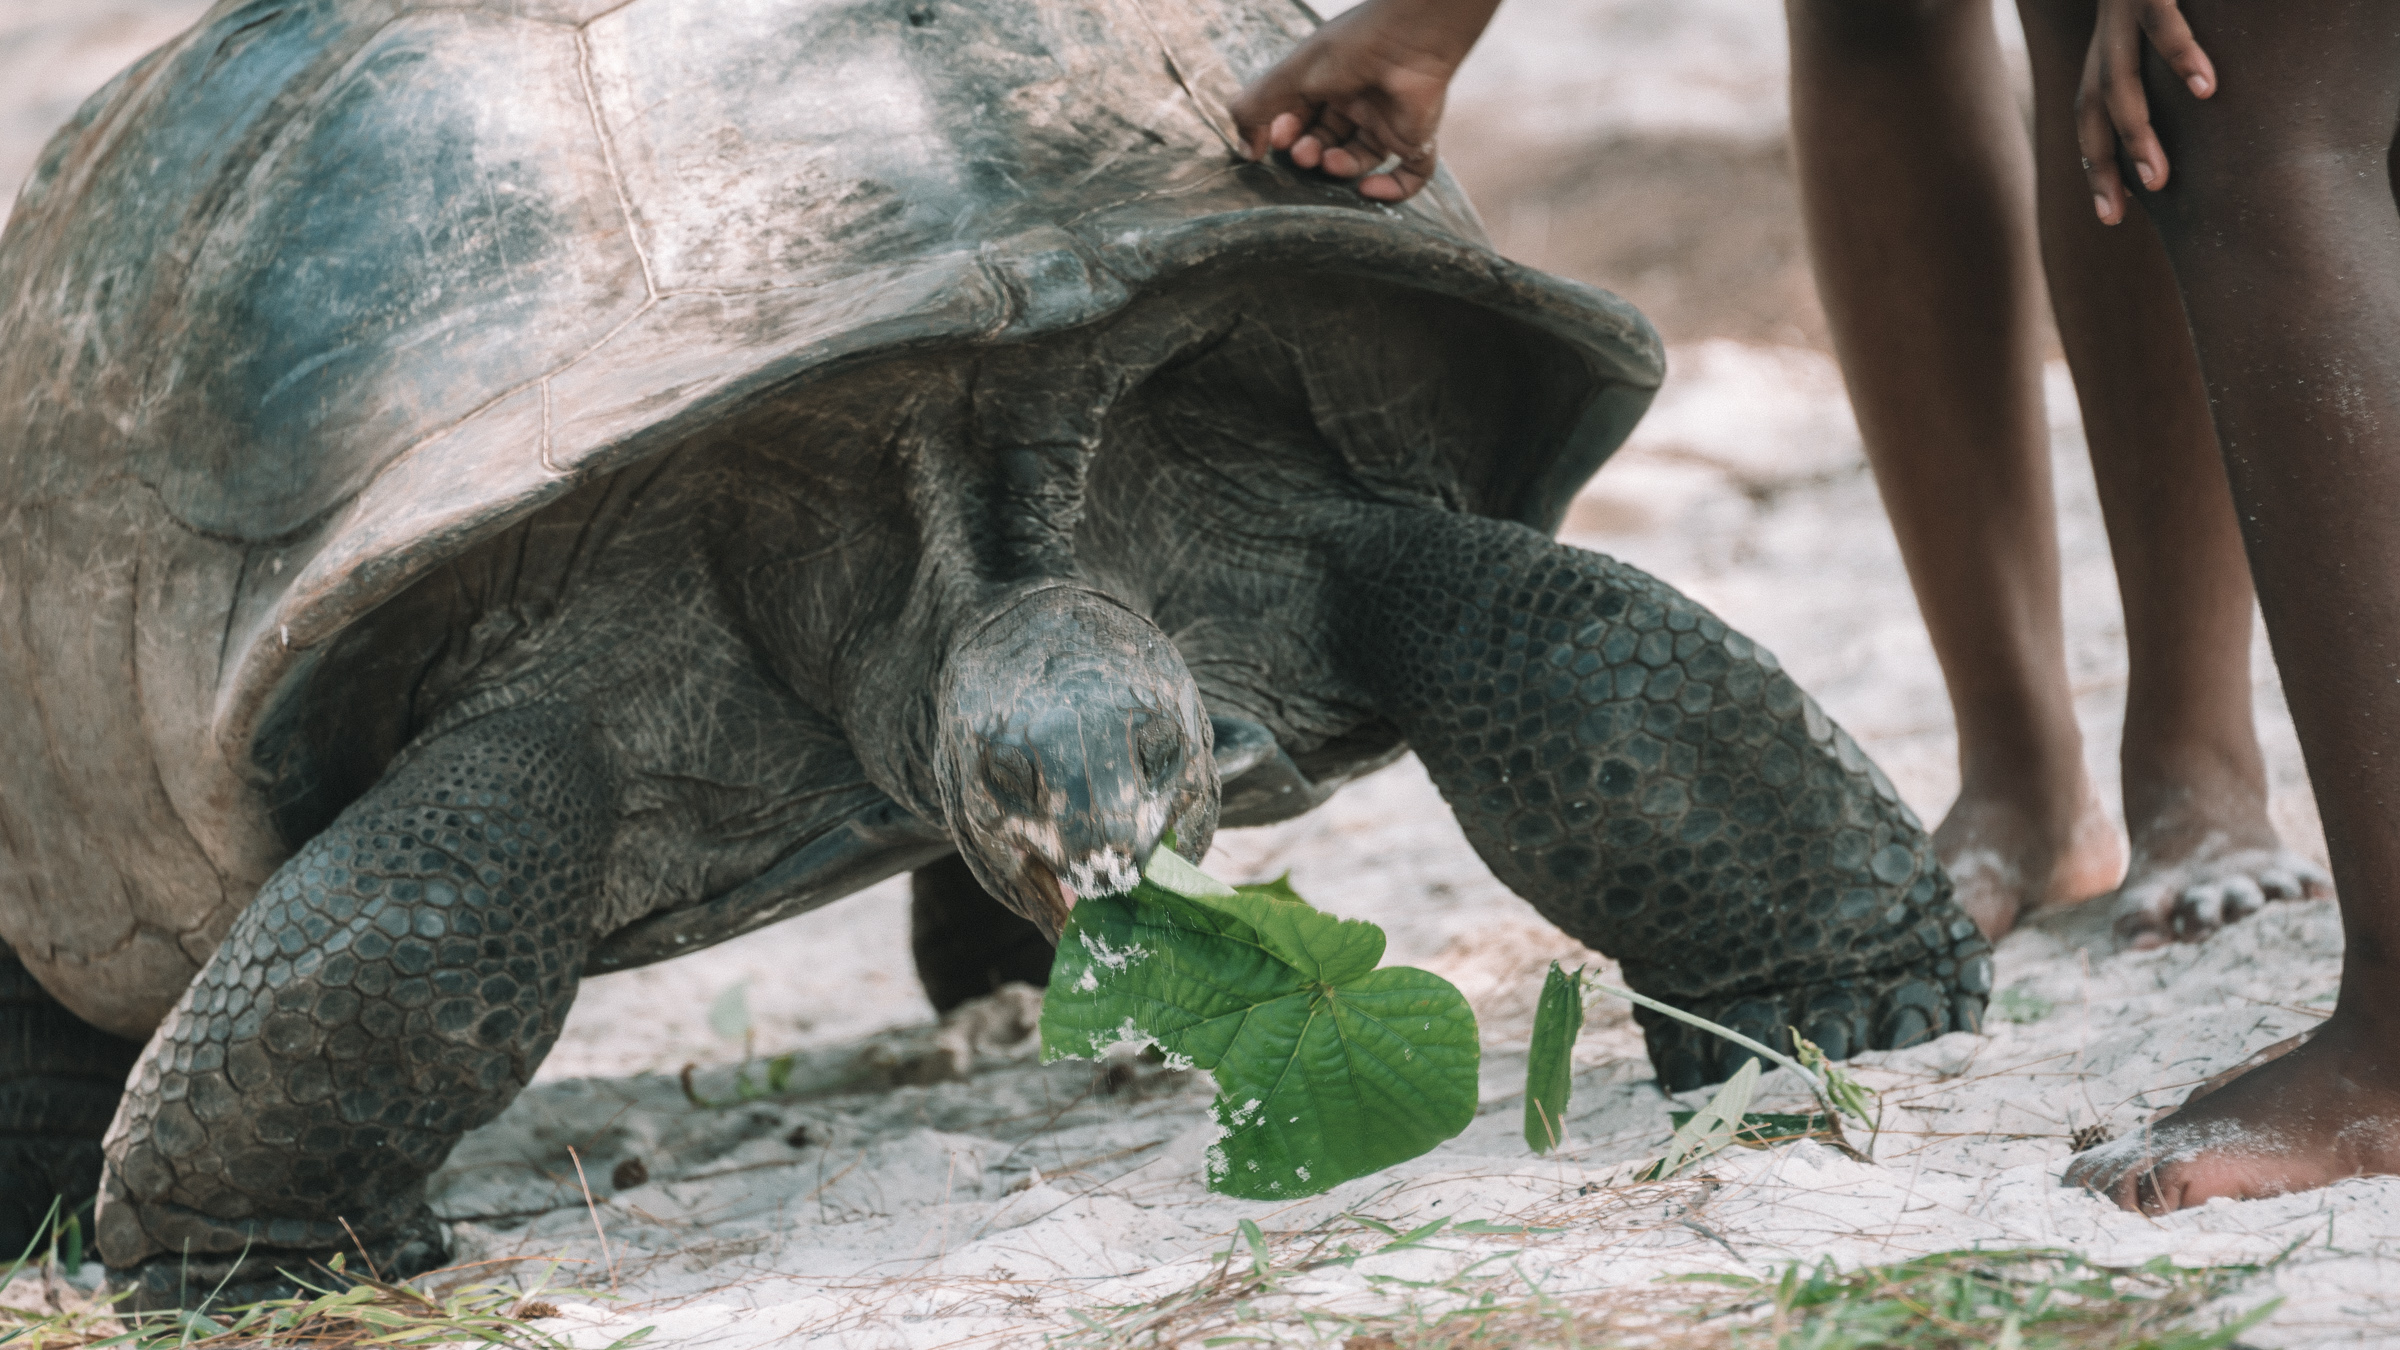 Curieuse Island – jättesköldpaddor & Coco de Mer-palmer